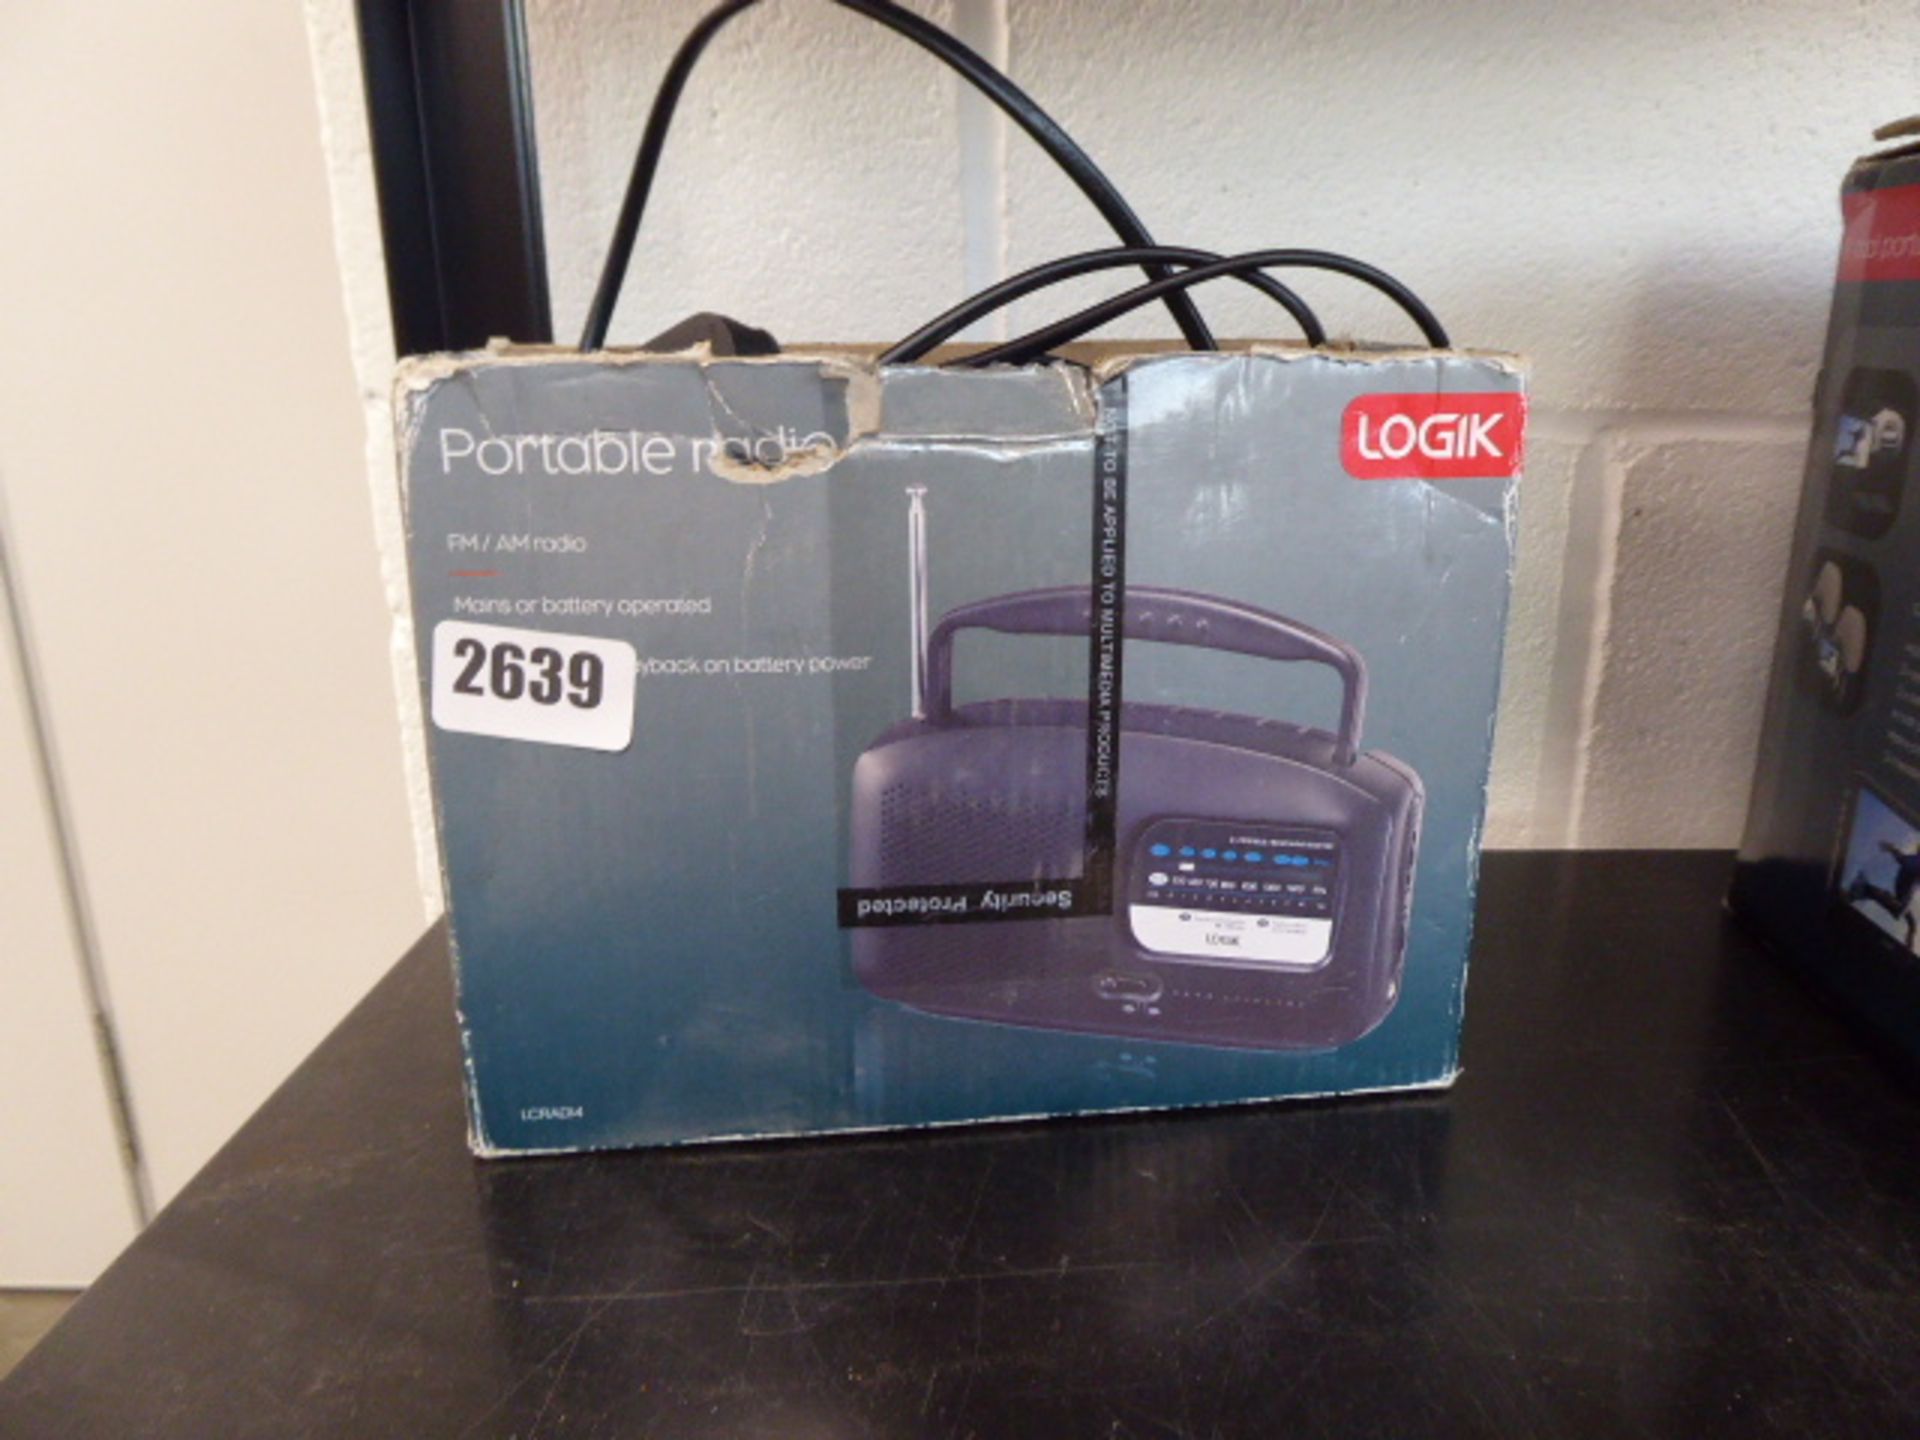 2779 Logic portable radio in box